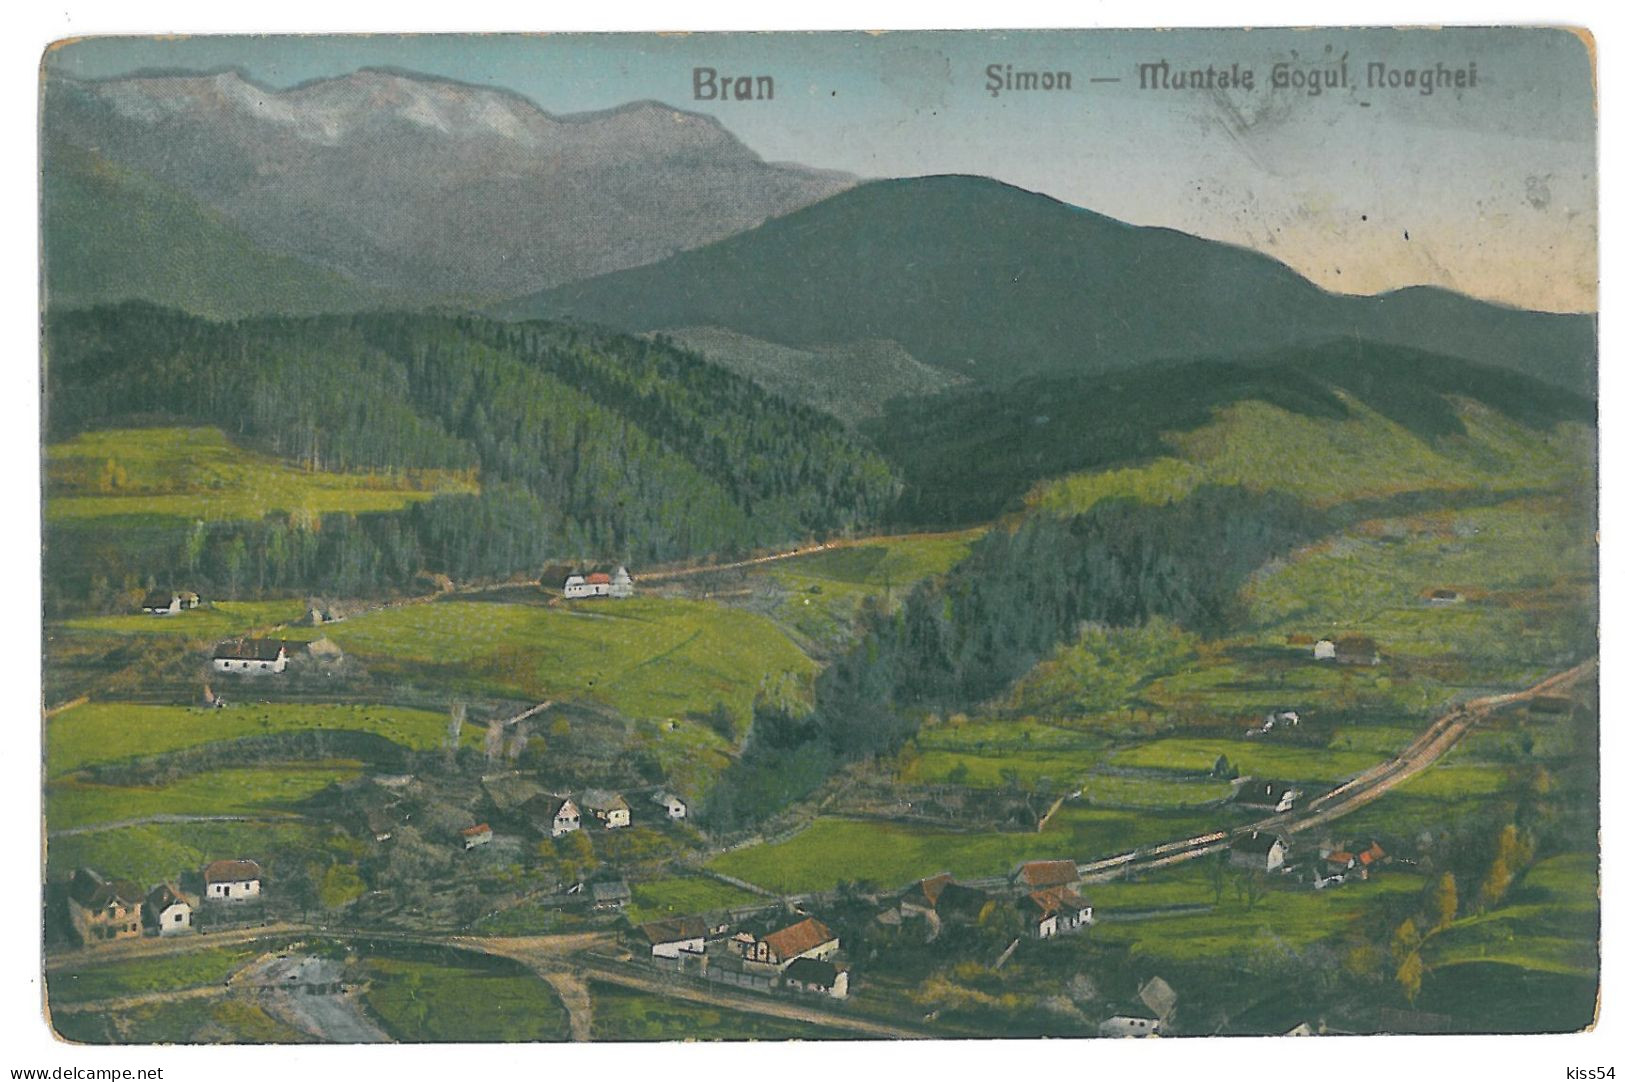 RO 91 - 13460 BRAN Brasov, Mountain, Romania - Old Postcard - Unused - Roumanie